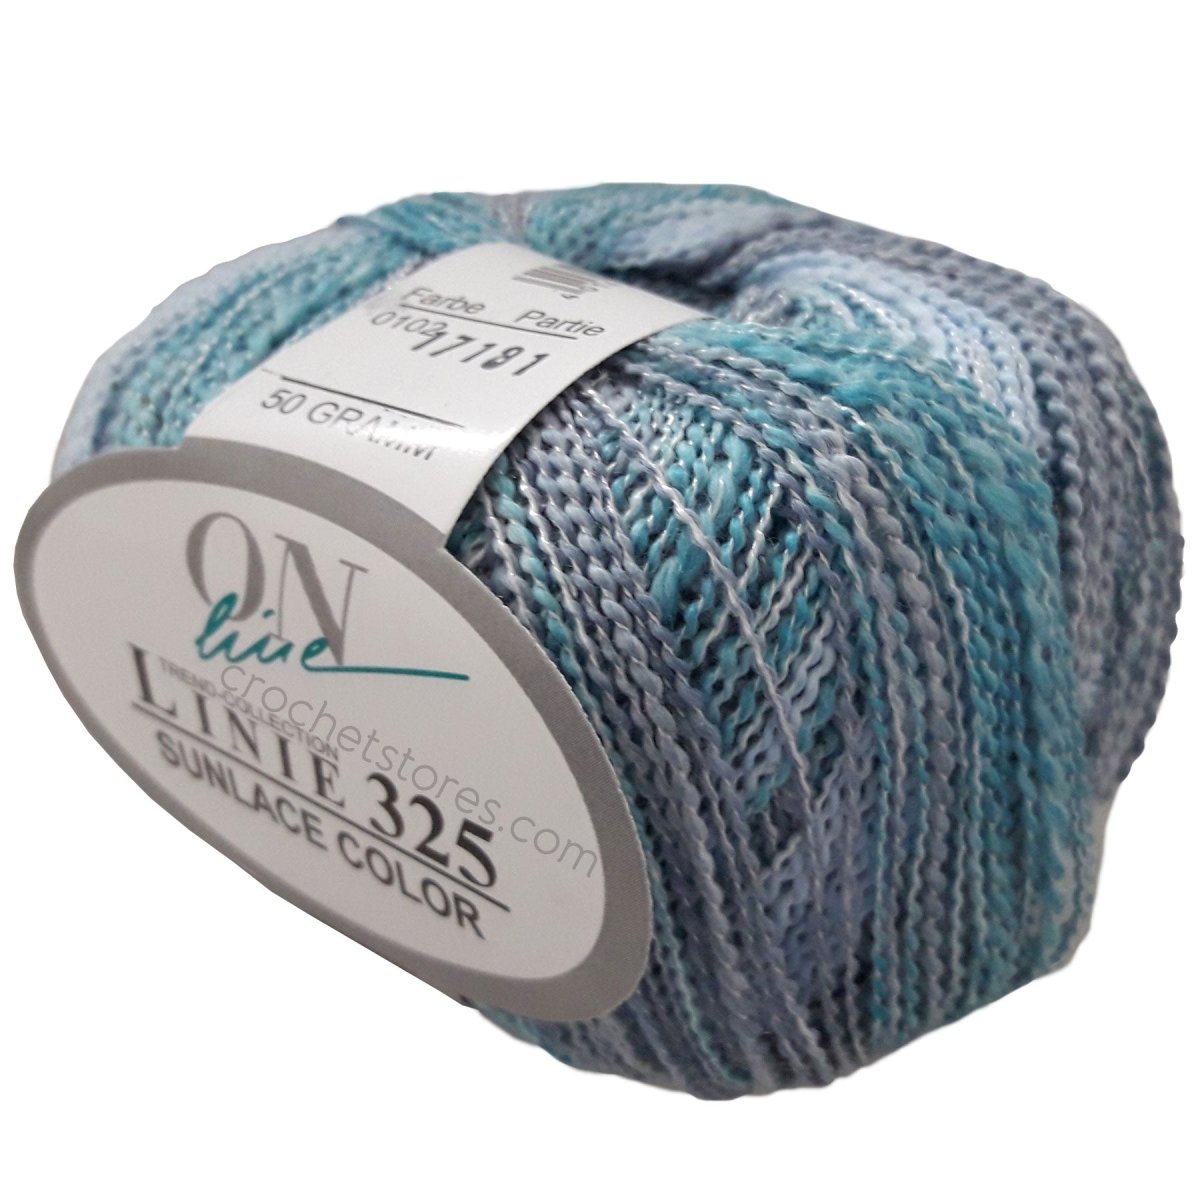 SUNLACE - Crochetstores110325-1024014366140962